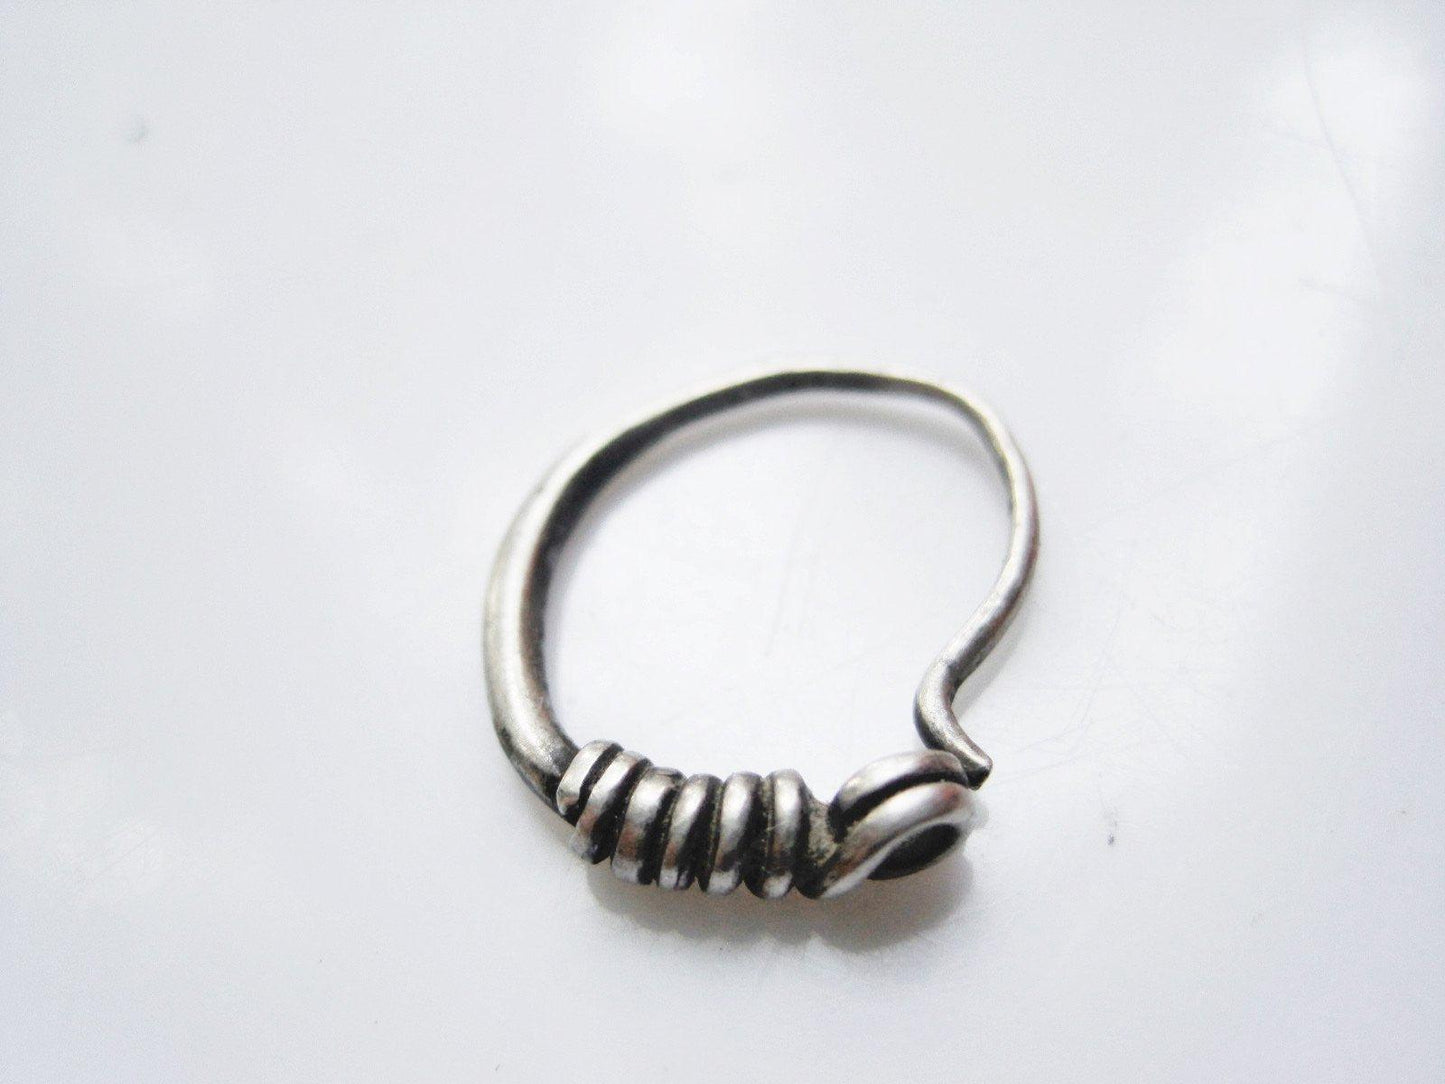 silver hoop nose ring